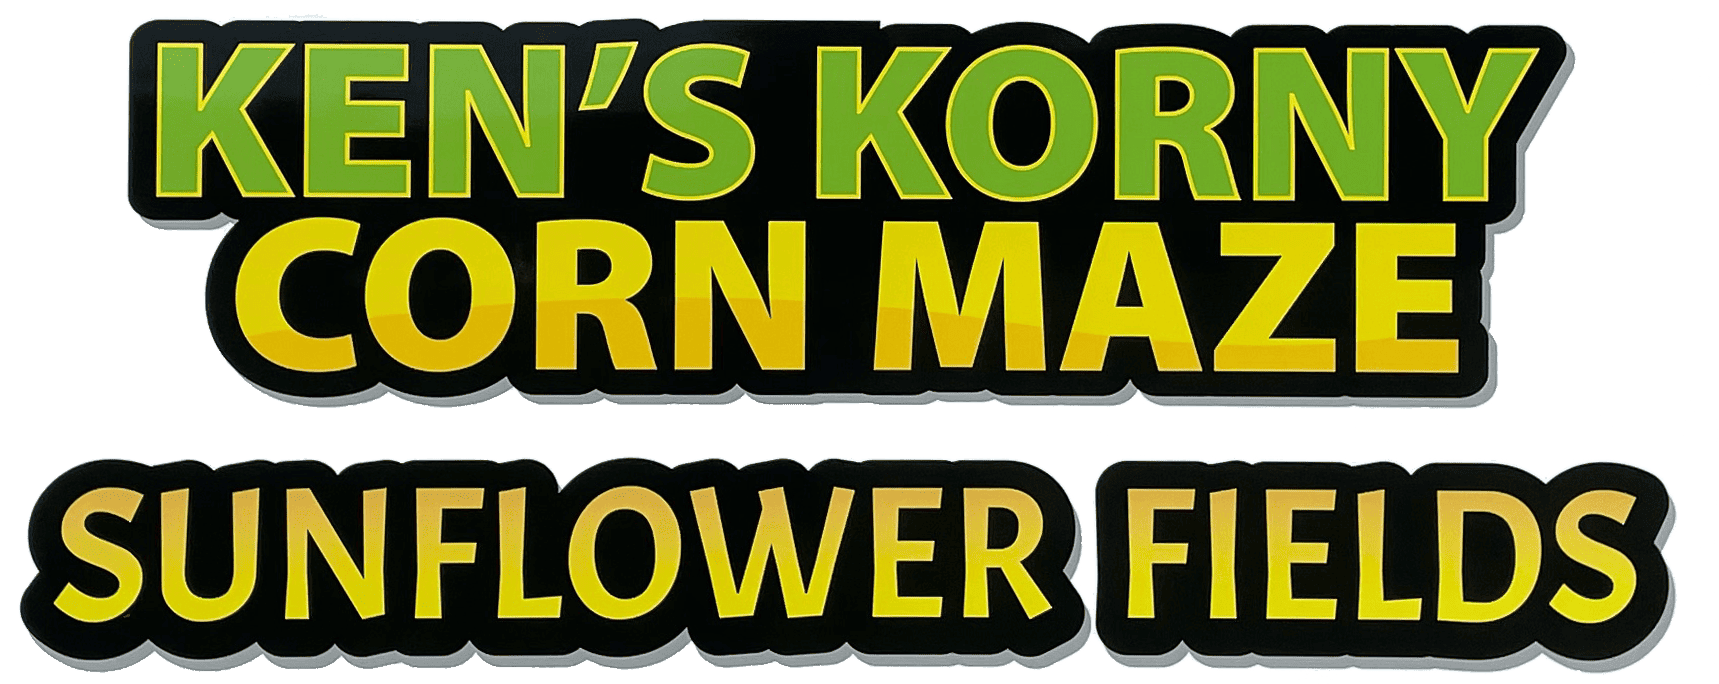 Ken's Korny Corn Maze